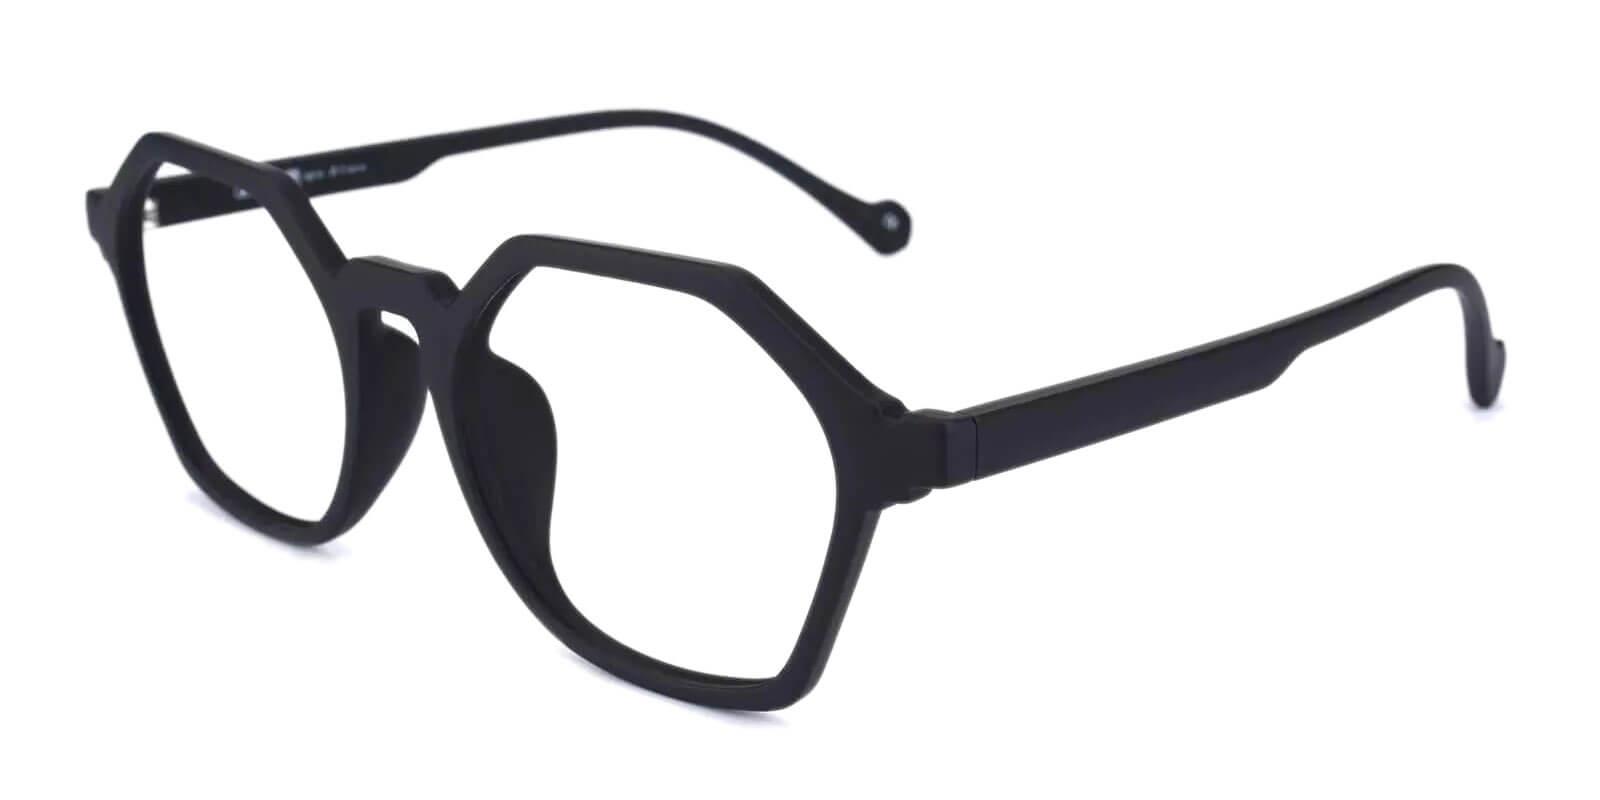 Sofia Black TR Eyeglasses , UniversalBridgeFit Frames from ABBE Glasses